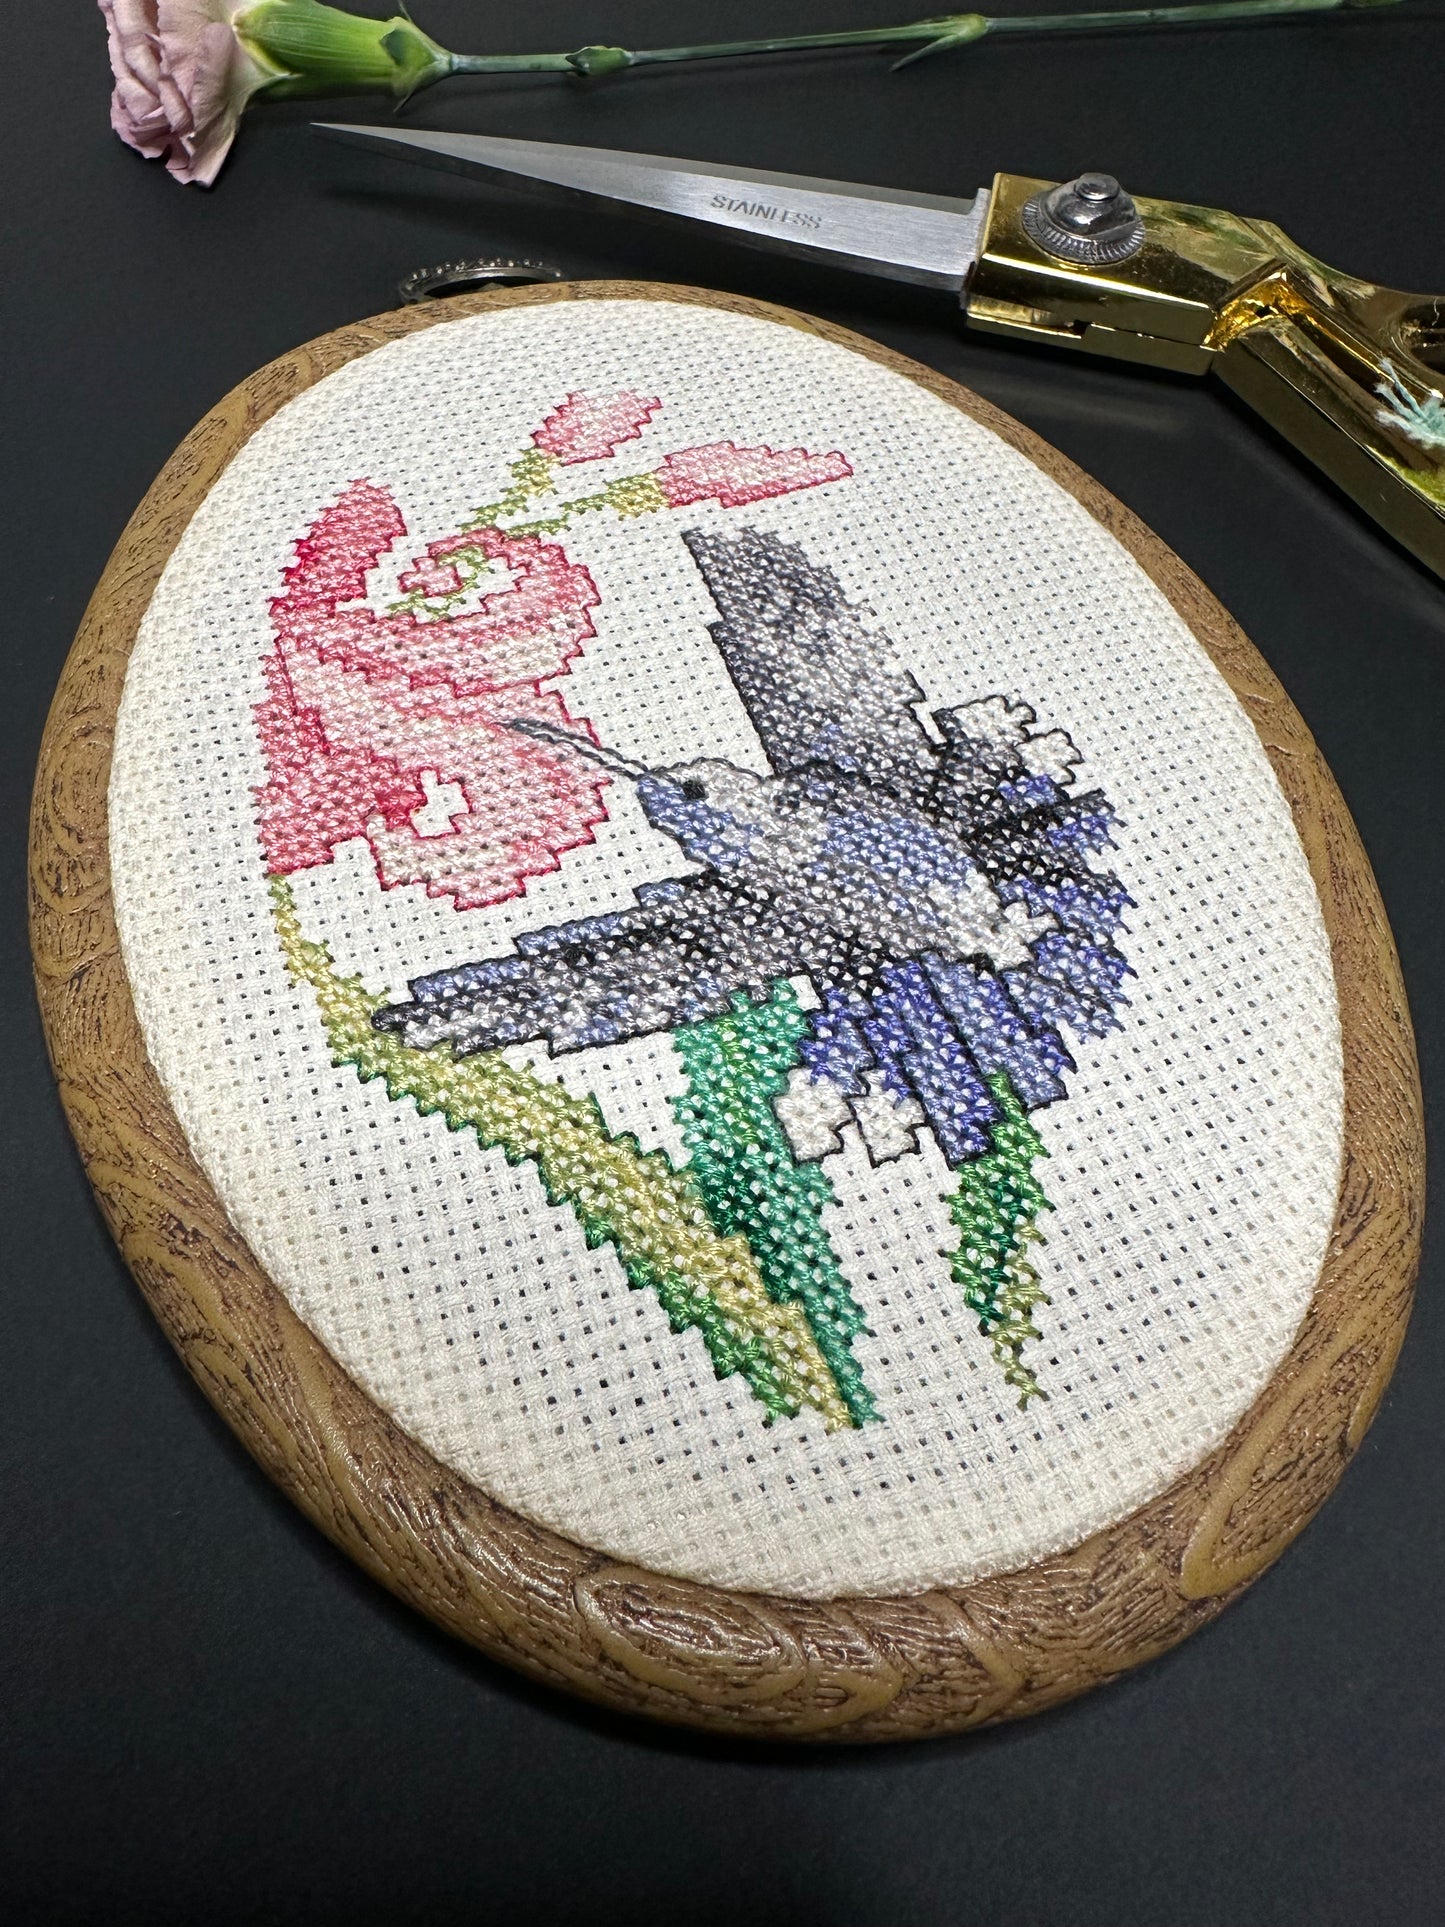 Hummingbird and Flower Cross Stitch Needlework in Gold Frame